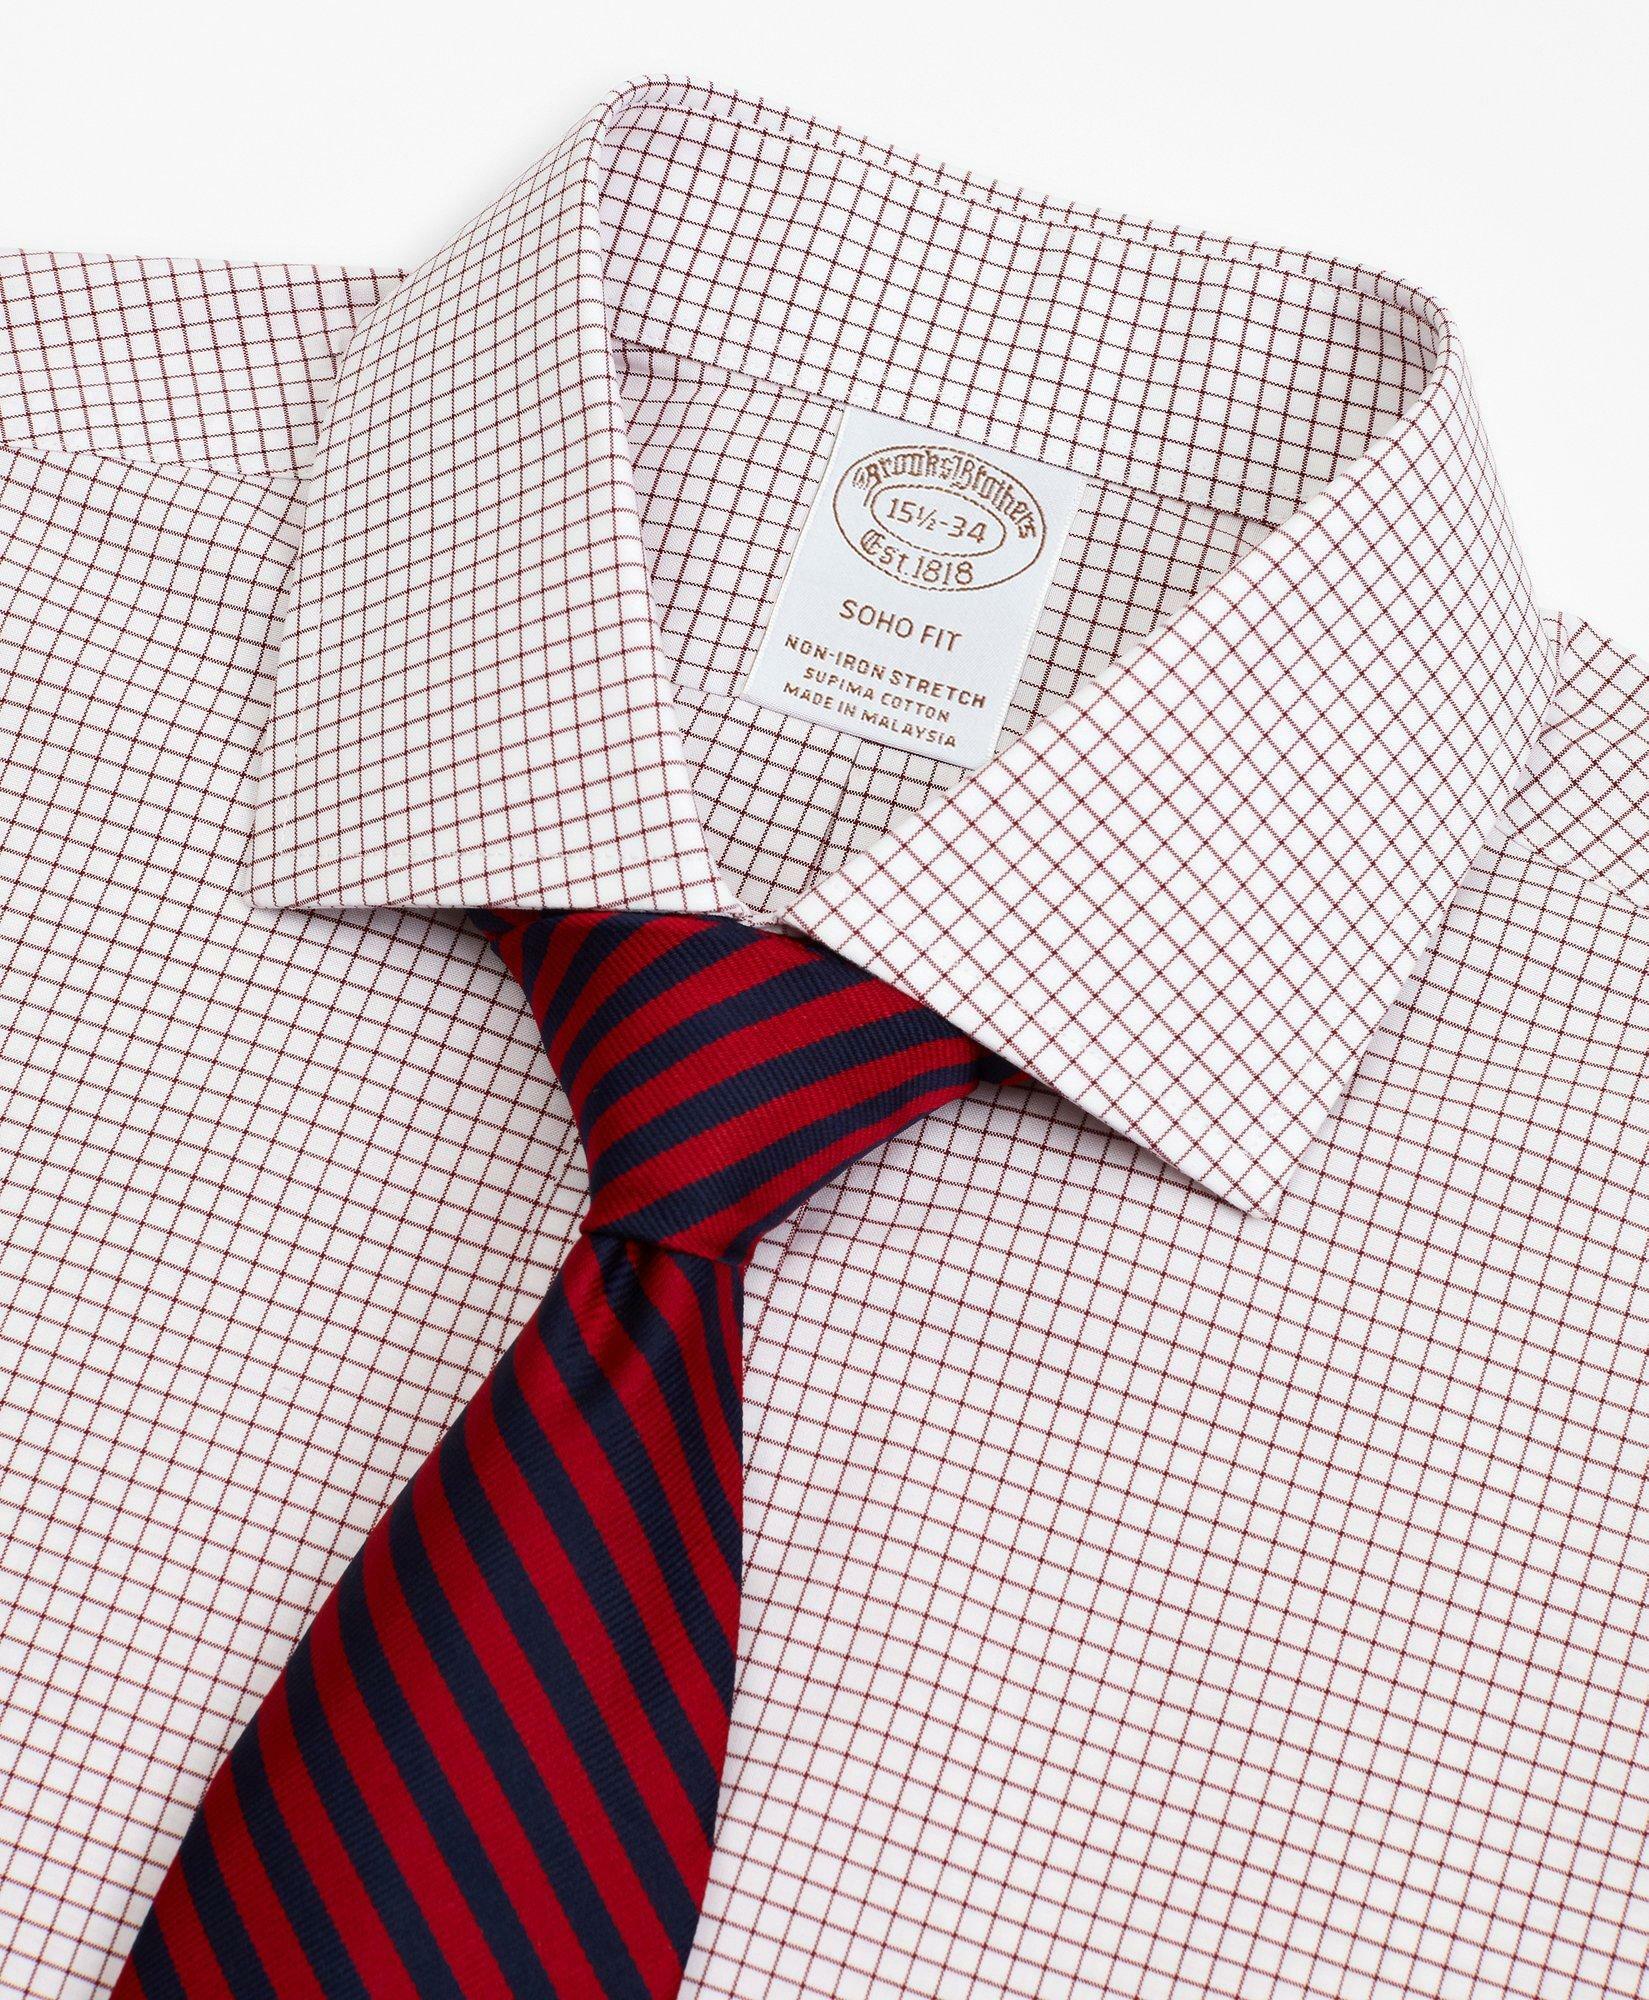 Brooks Brothers Men's Stretch Soho Extra-Slim-Fit Dress Shirt, Non-Iron Poplin English Collar Small Grid Check | Red